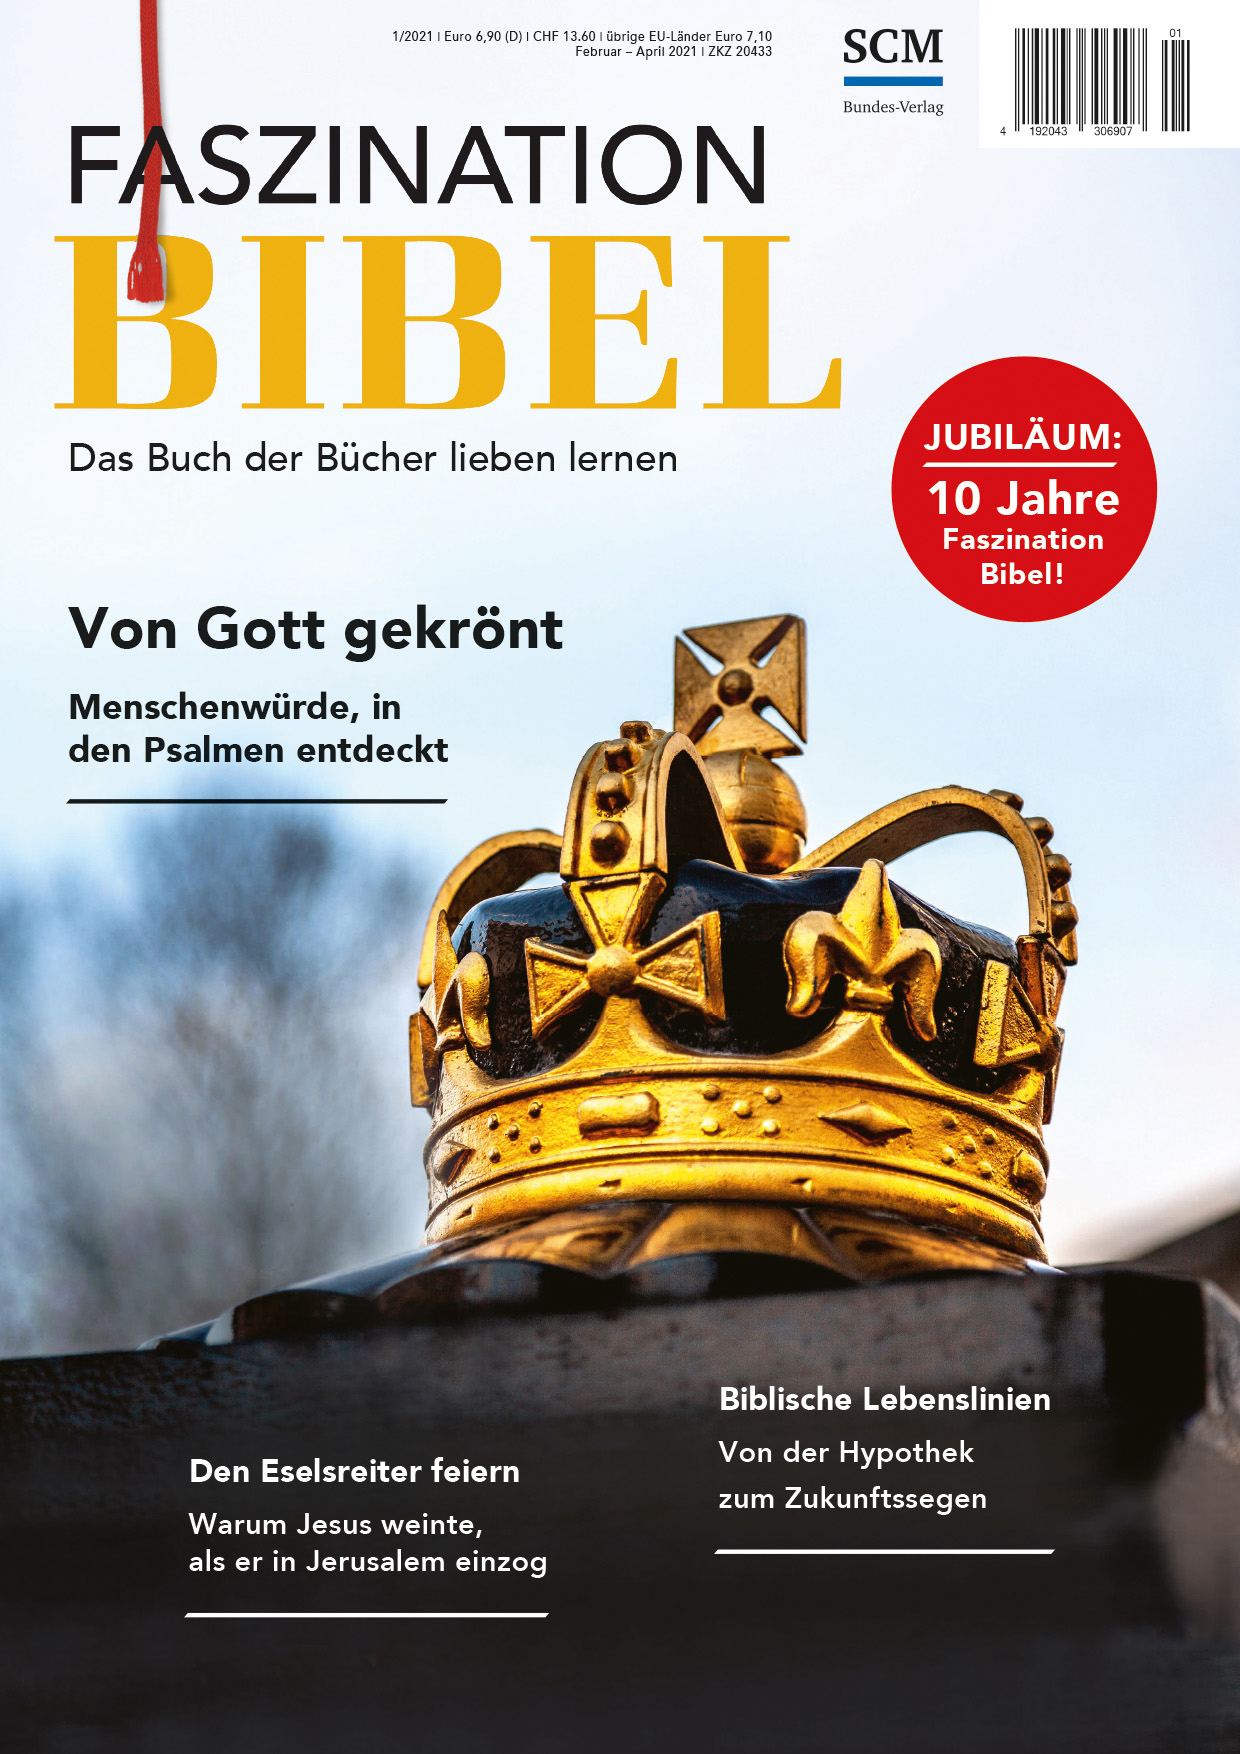 FASZINATION BIBEL - Abogutschein - Cover